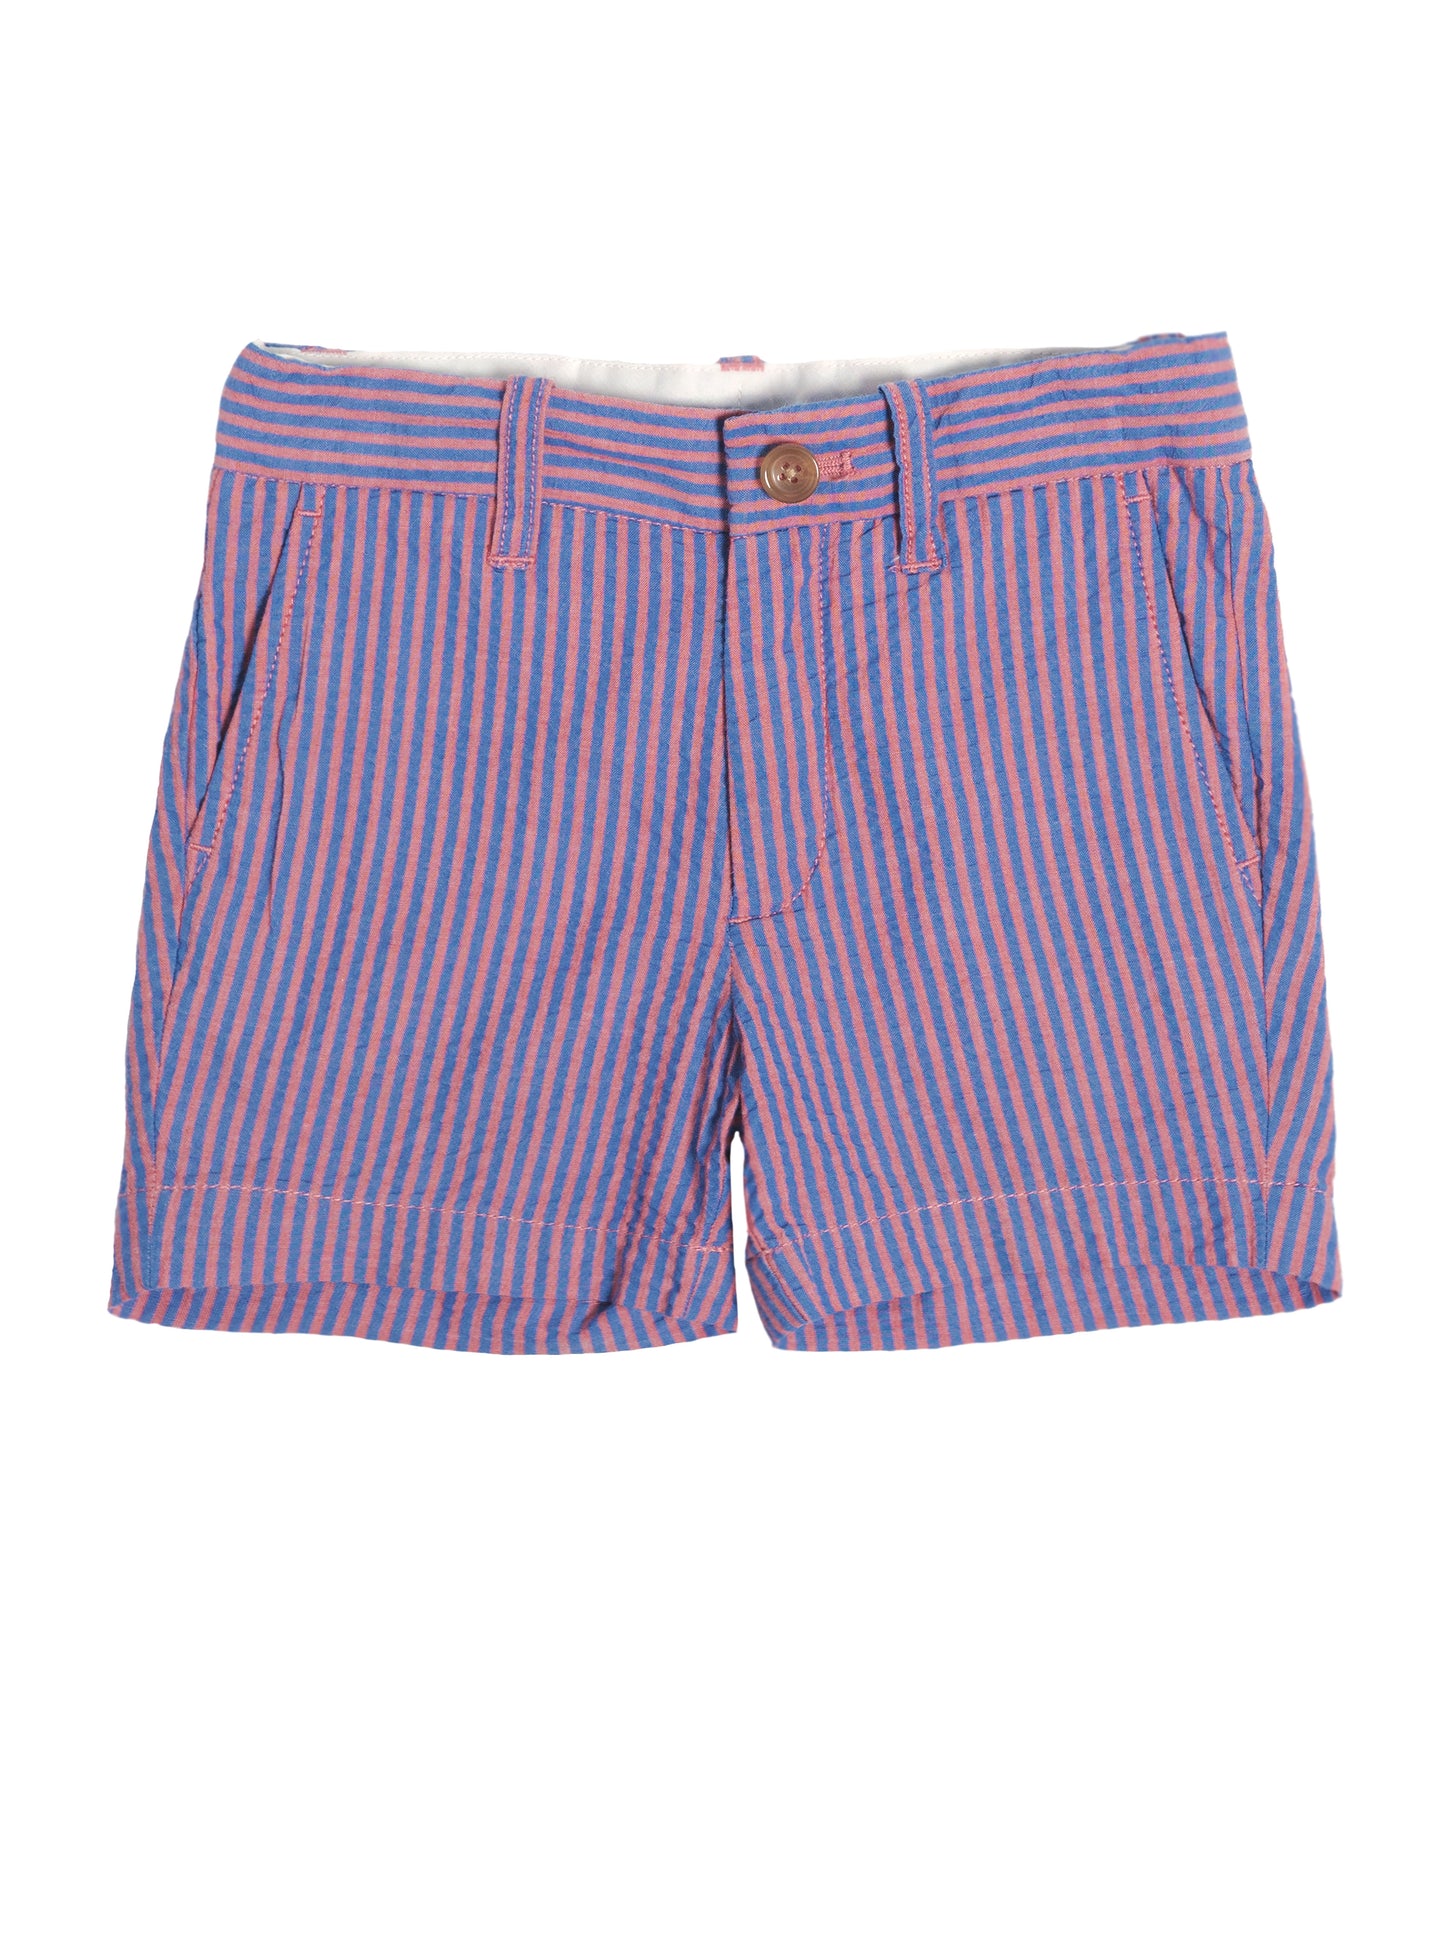 [2y] Crewcuts Stripe Salmon Pink & Blue Shorts